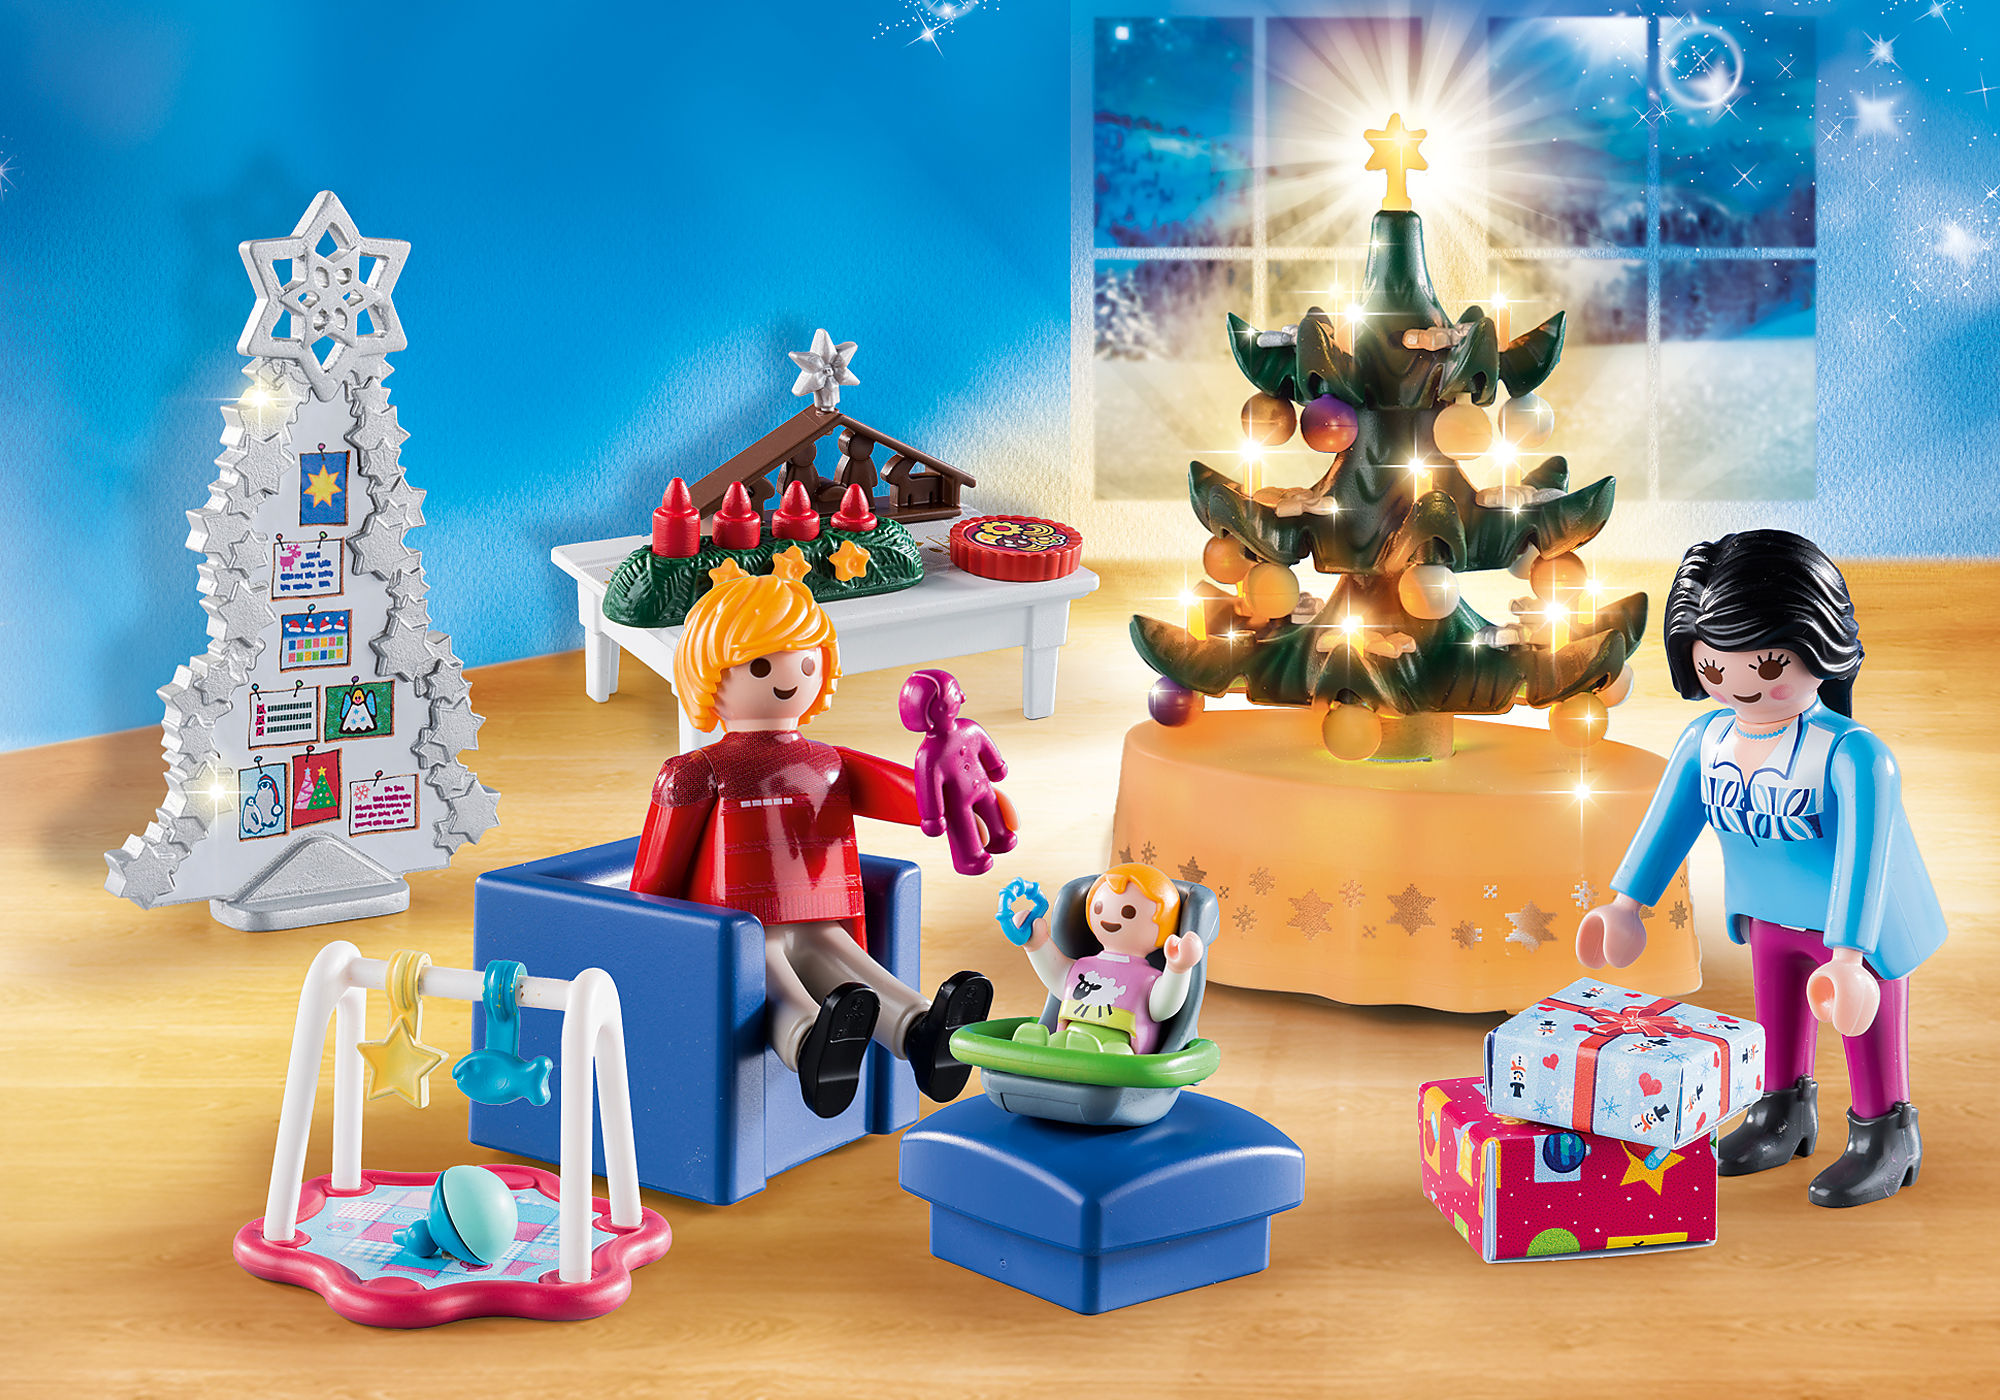 Immagini Natale Jpeg.Natale In Famiglia 9495 Playmobil Italia